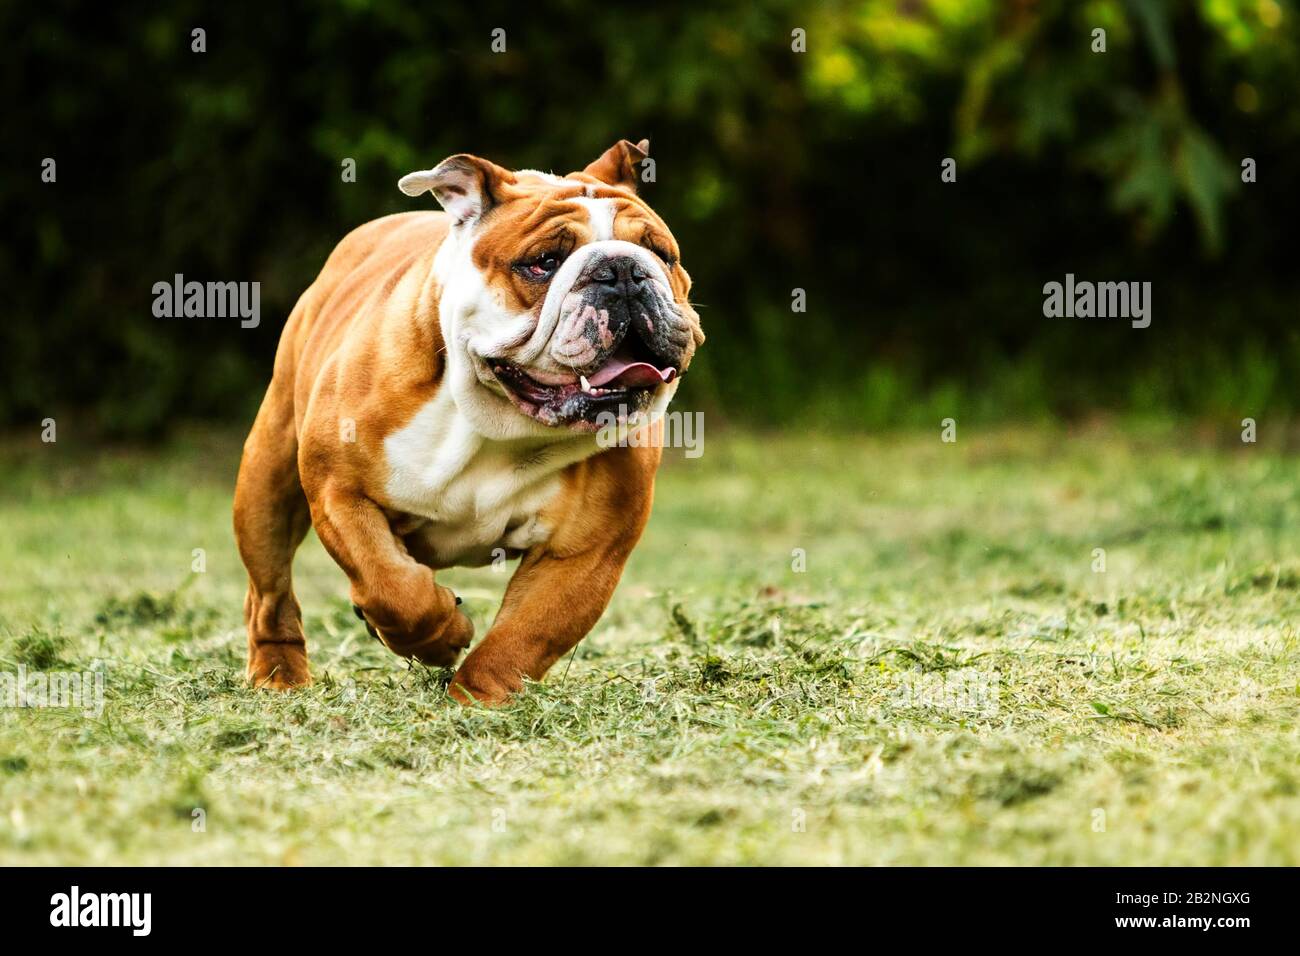 Adult Male Purebred English Bulldog Running Toward The Camera Low Angle  Stock Photo - Alamy